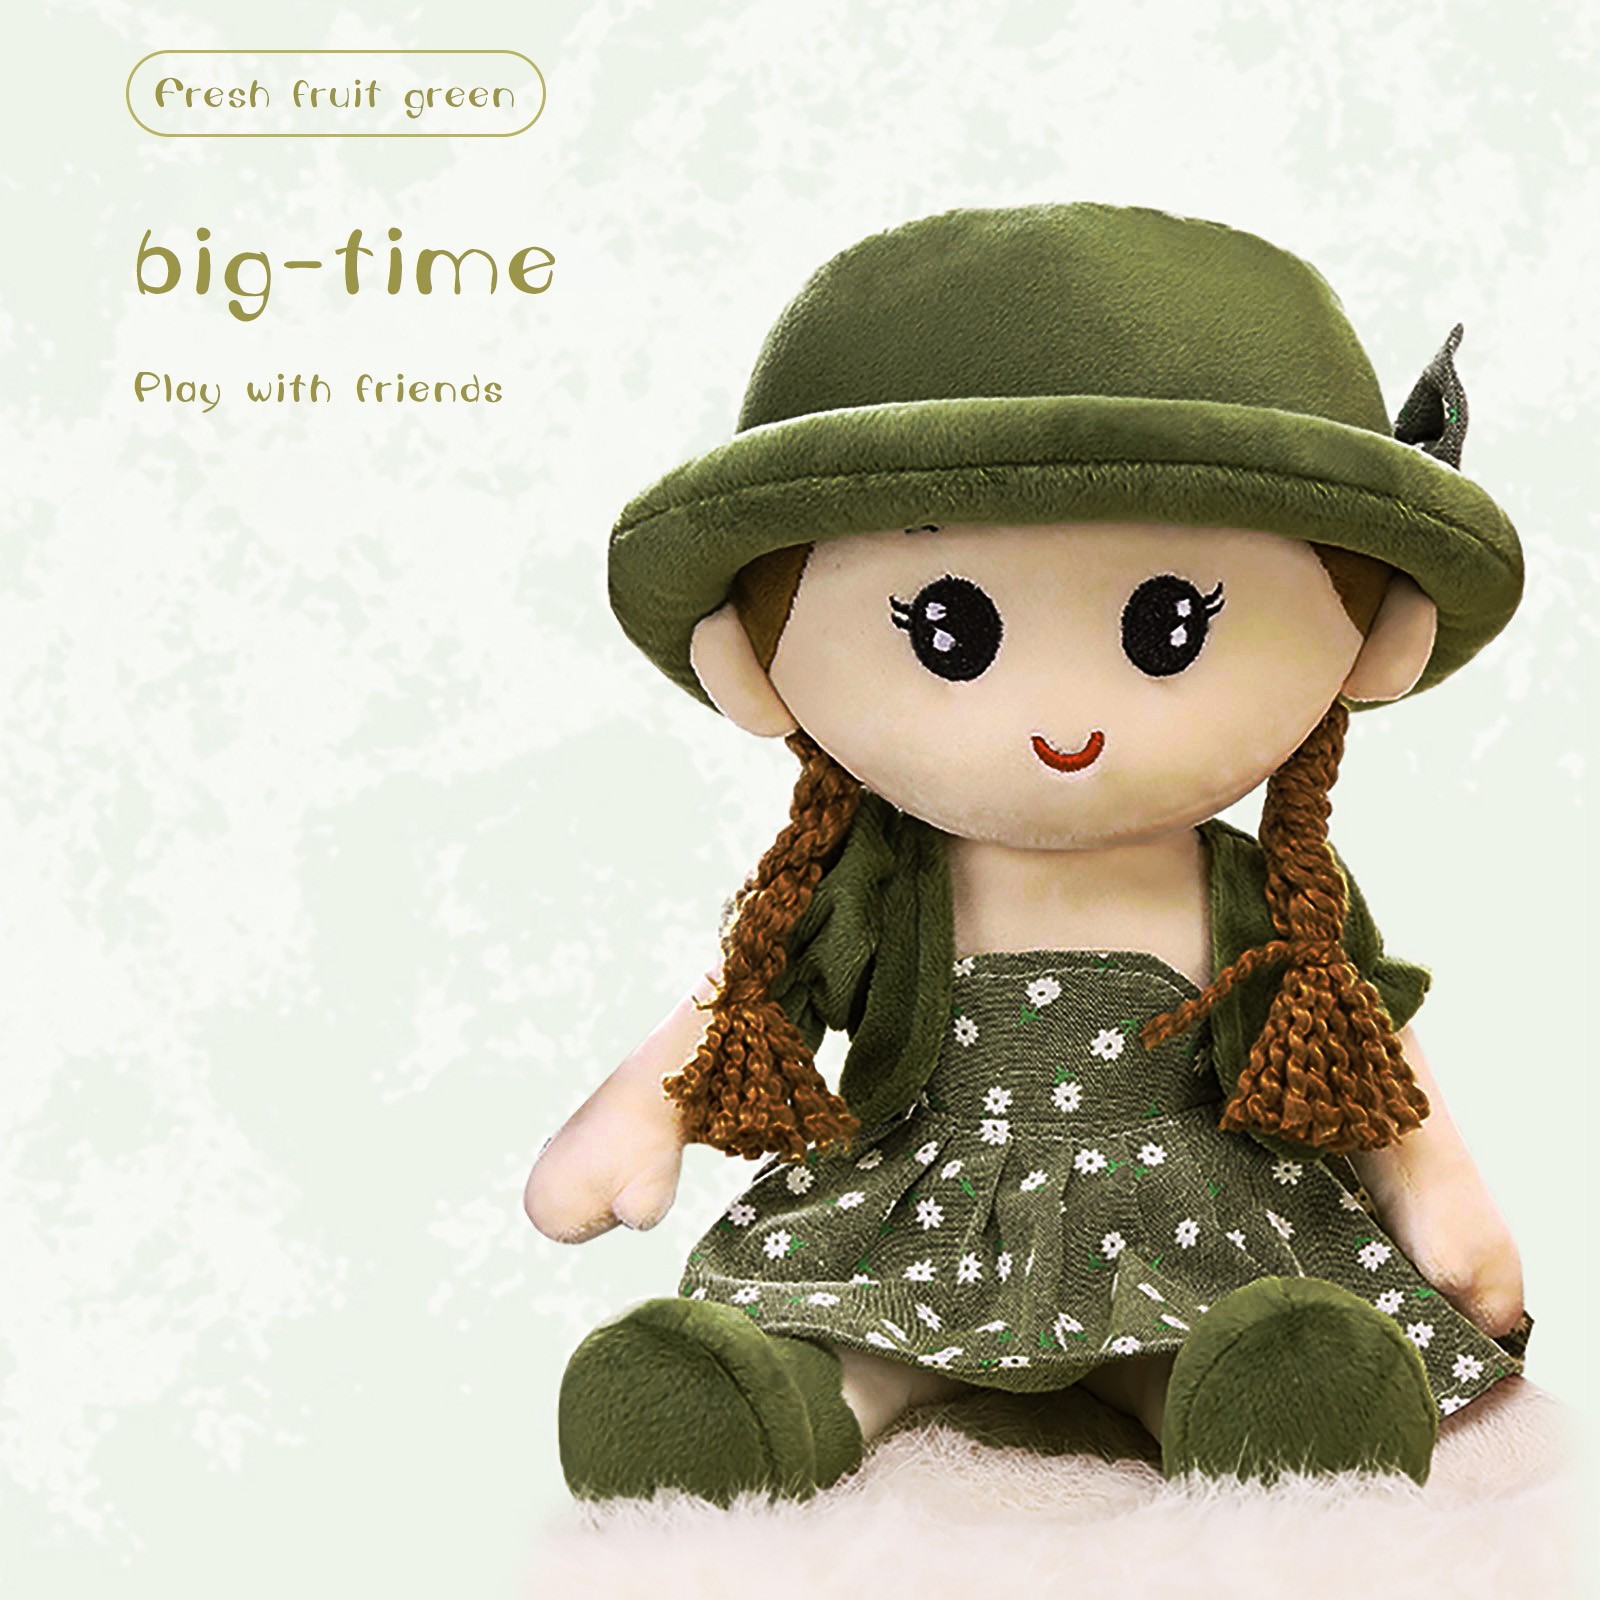 Baofu Baby Girls Soft Doll Cute Cuddly Stuffed Toy Girl Decoration Companion Toys Doll, Size: Small, Green